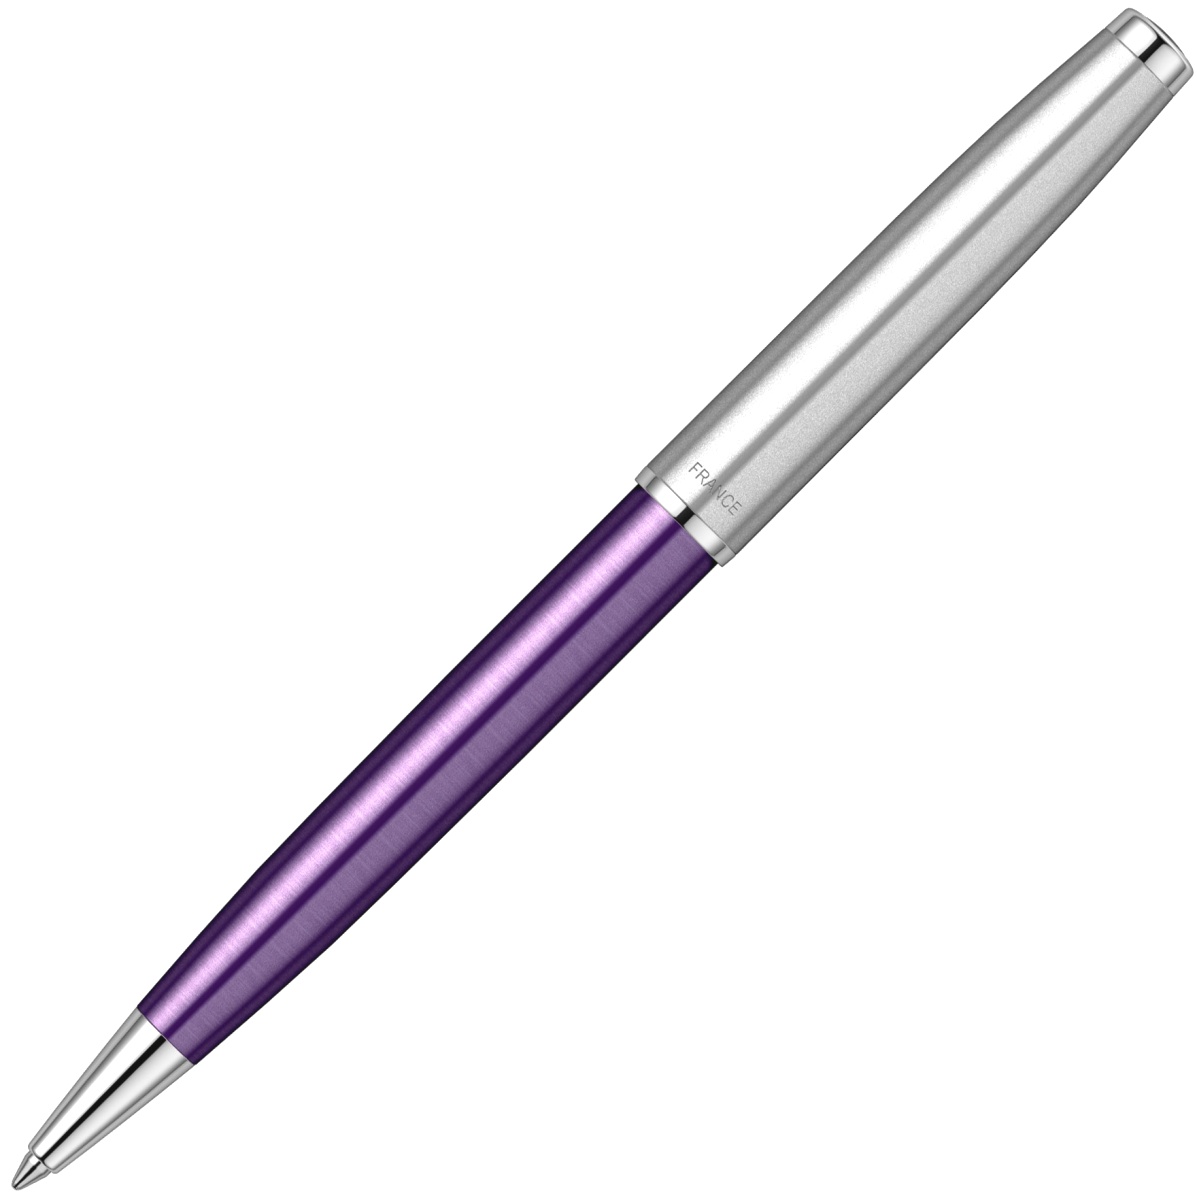  Ручка шариковая Parker Sonnet Essential SB K545, Violet CT, фото 3